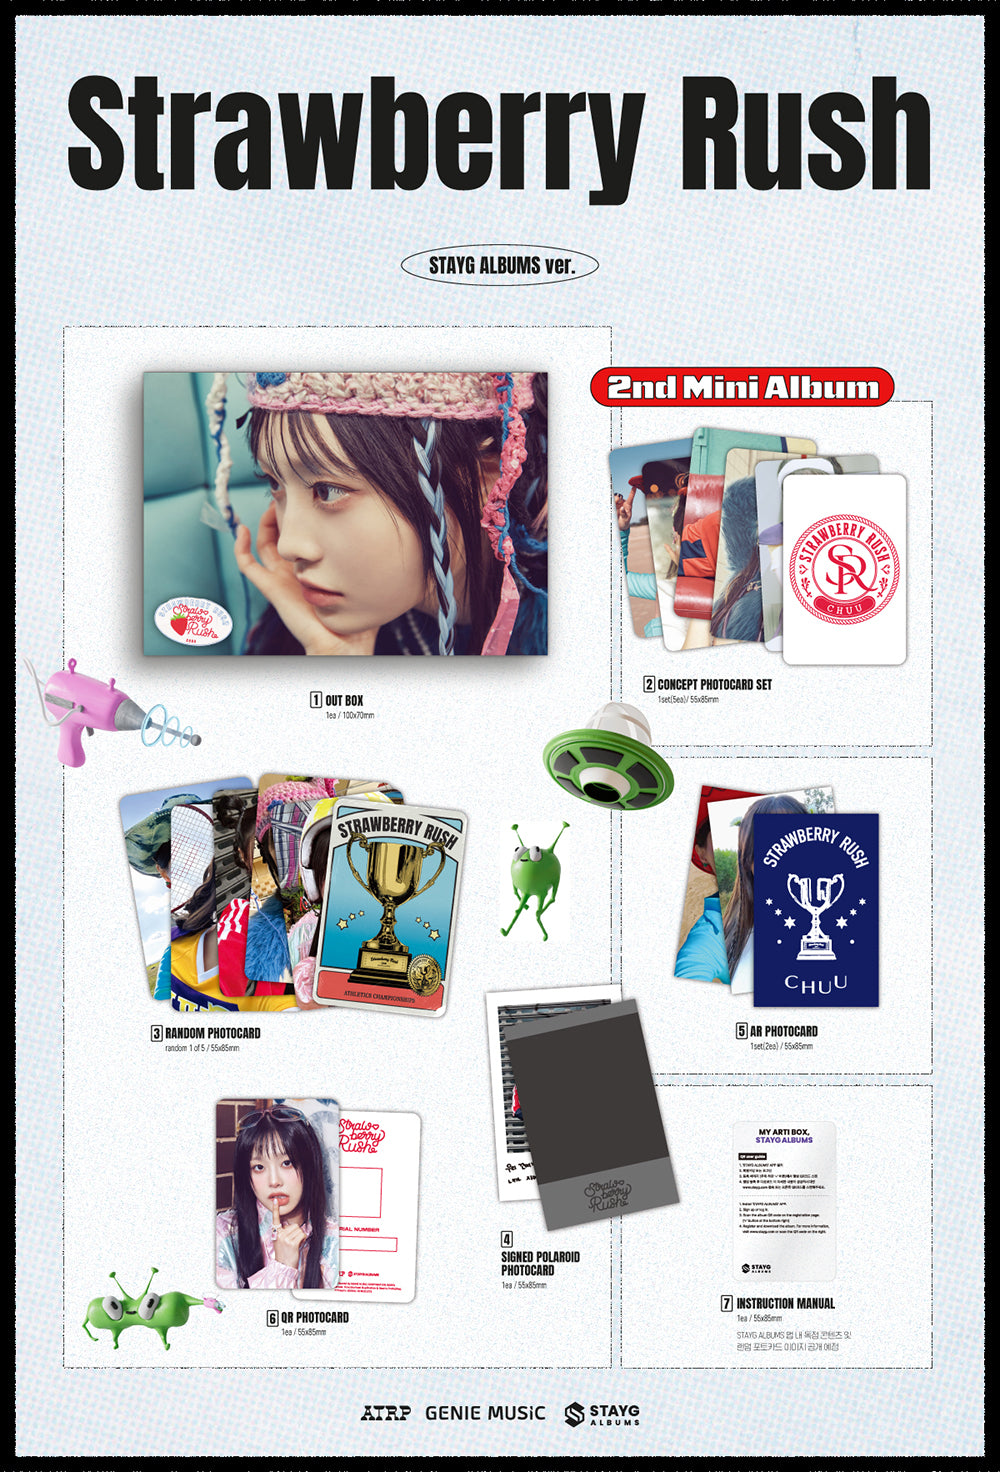 Chuu 2nd Mini Album Strawberry Rush - STAYG Albums Version Inclusions: Out Box, QR Photocard, Concept Photocard Set, Random Photocard, Signed Polaroid Photocard, AR Photocard Set, Instruction Manual